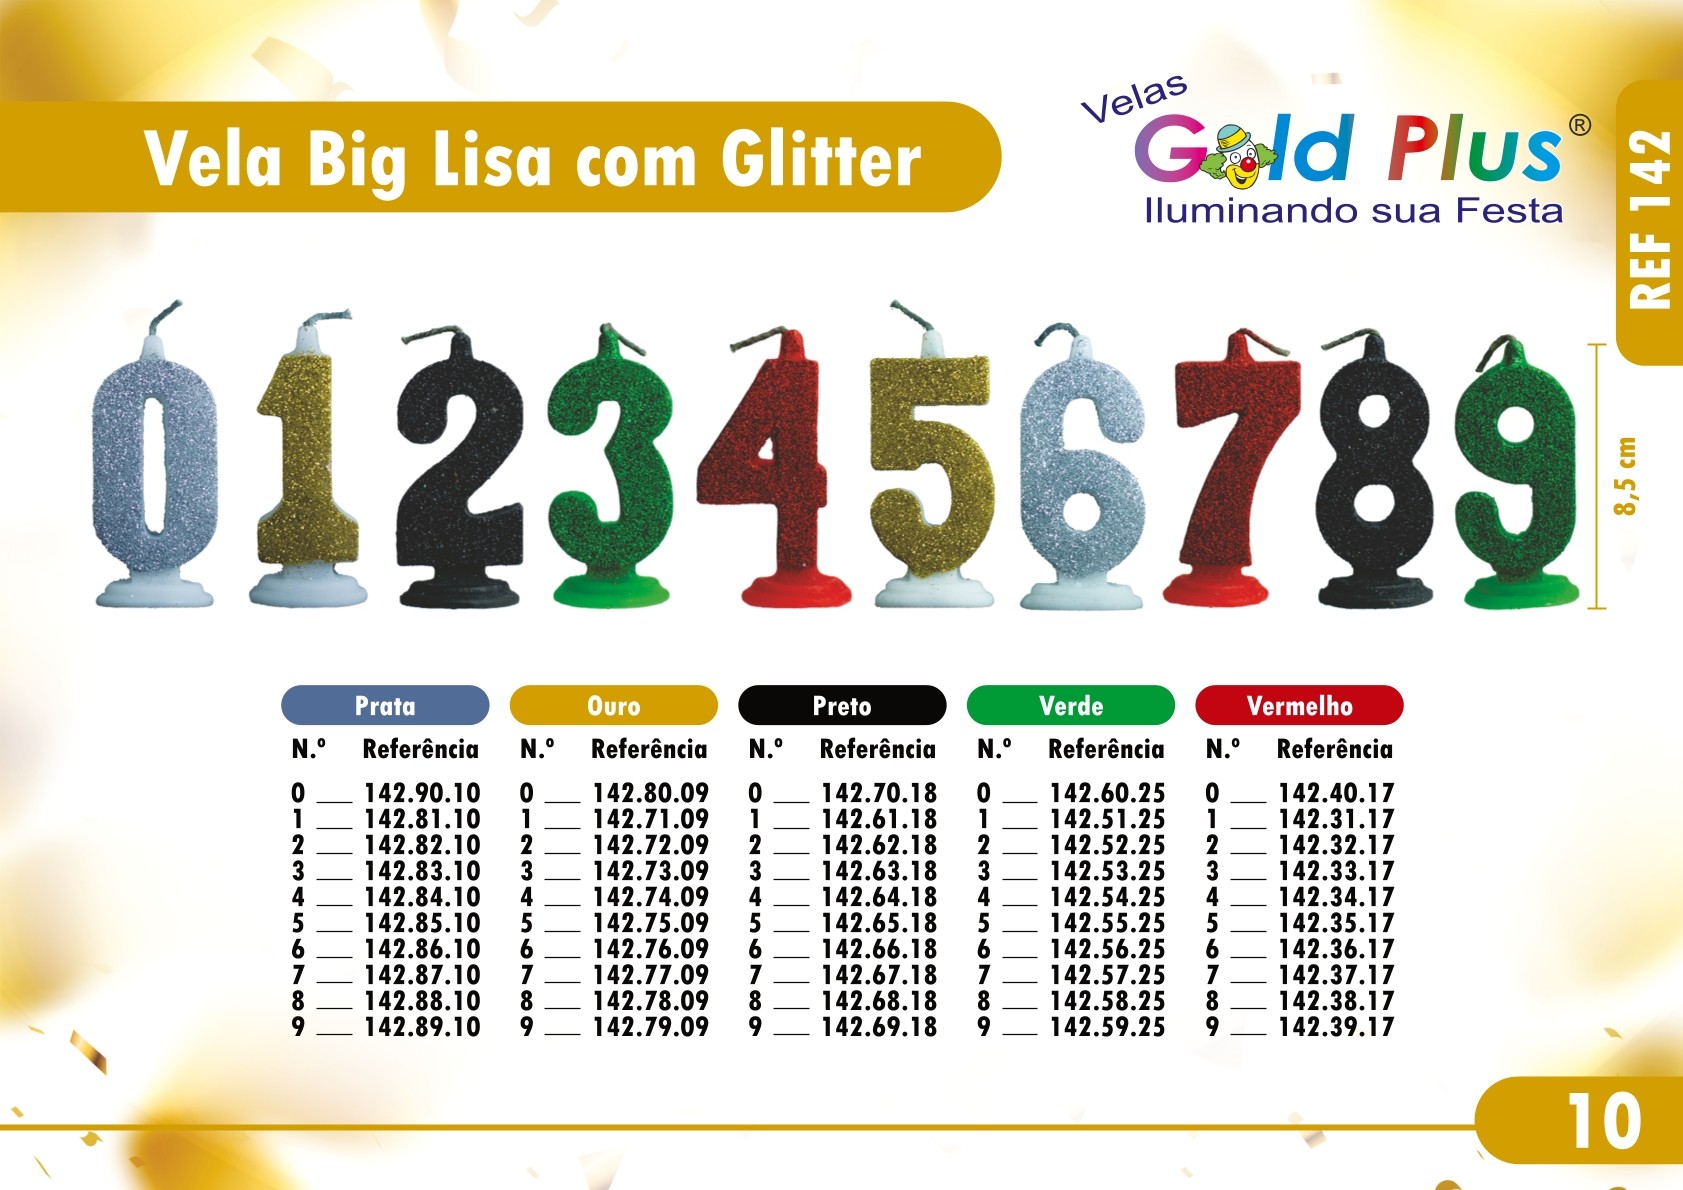 REF. 142 - VELA BIG LISA COM GLITTER